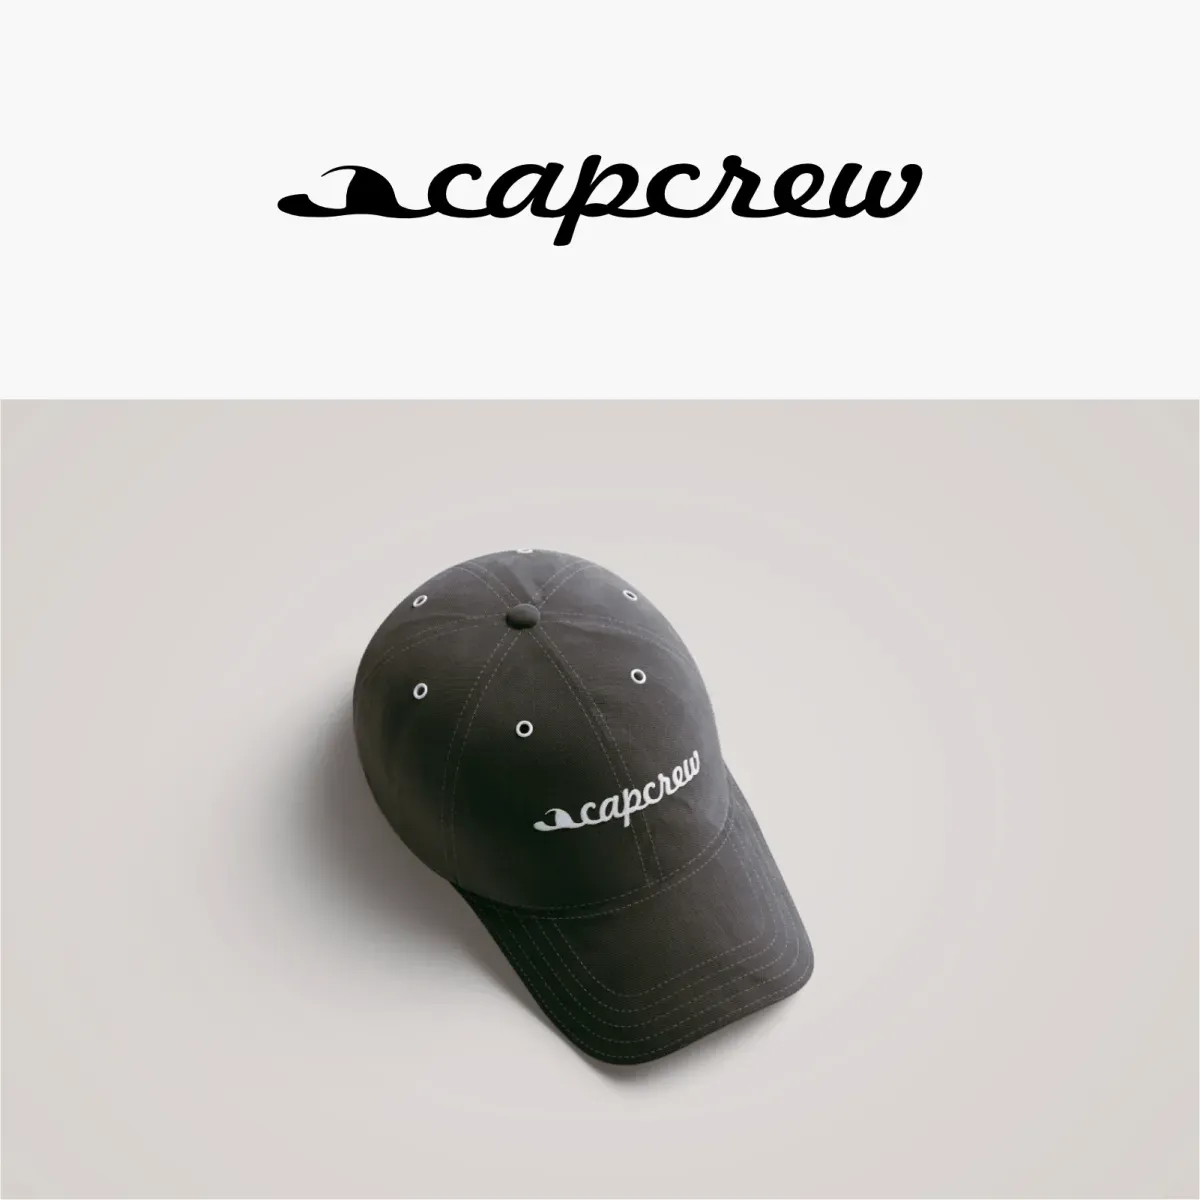 Capcrew logo alternative propositions2